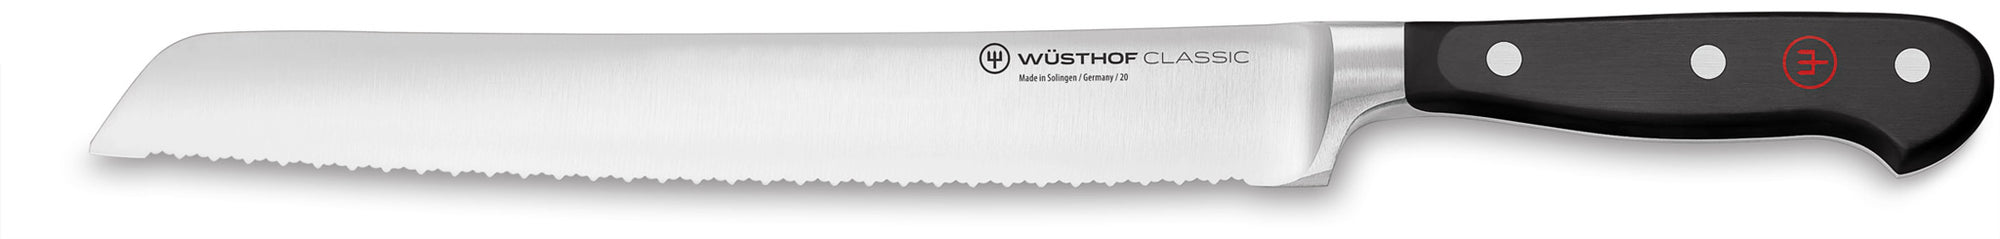 Wusthof Double Serrated Bread Knife Canada 4152